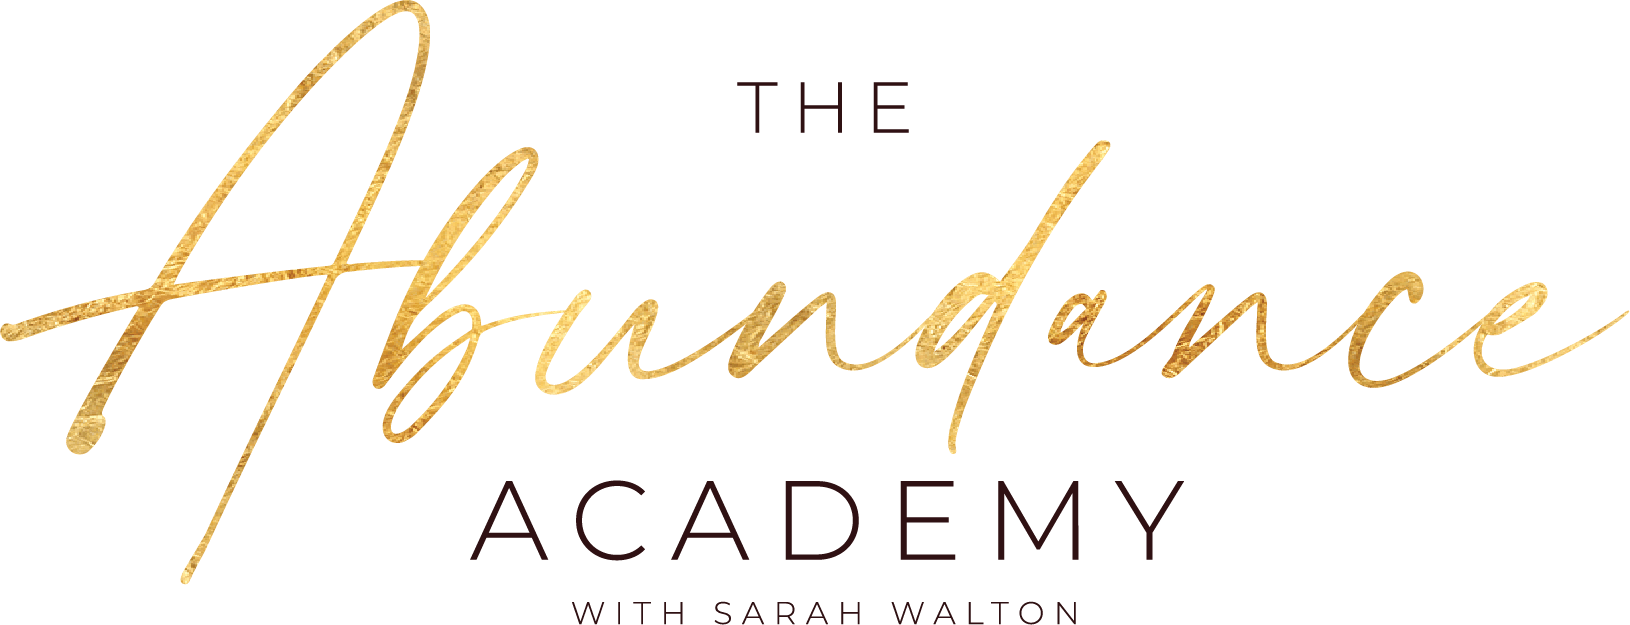 Text: The Abundance Academy with Sarah Walton. "Abundance" is in bright shiny gold color.